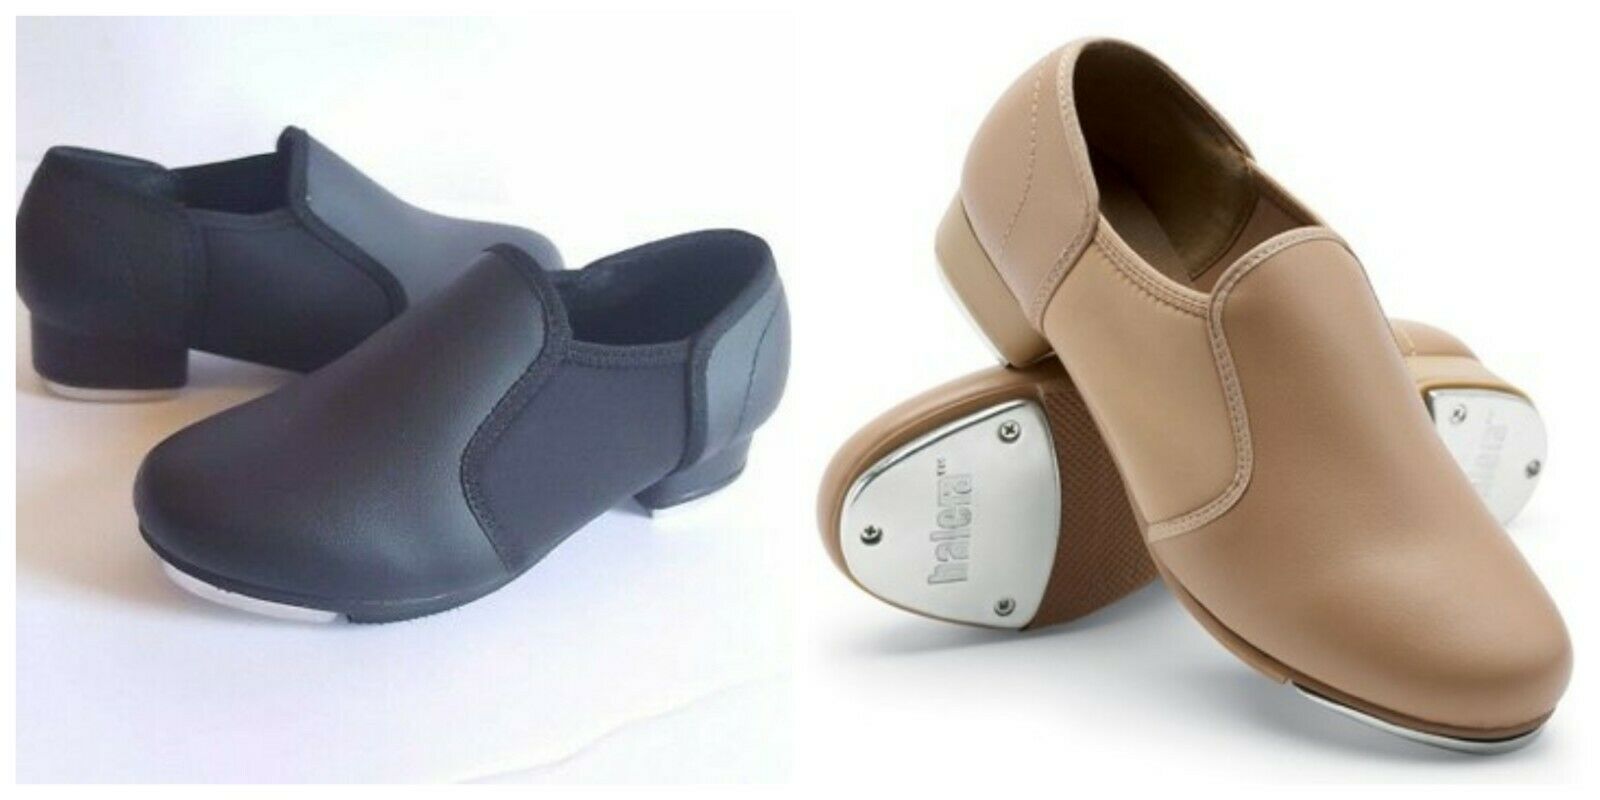 NEW Balera Slip on Black and Caramel Tap Shoes Child & Adult Size